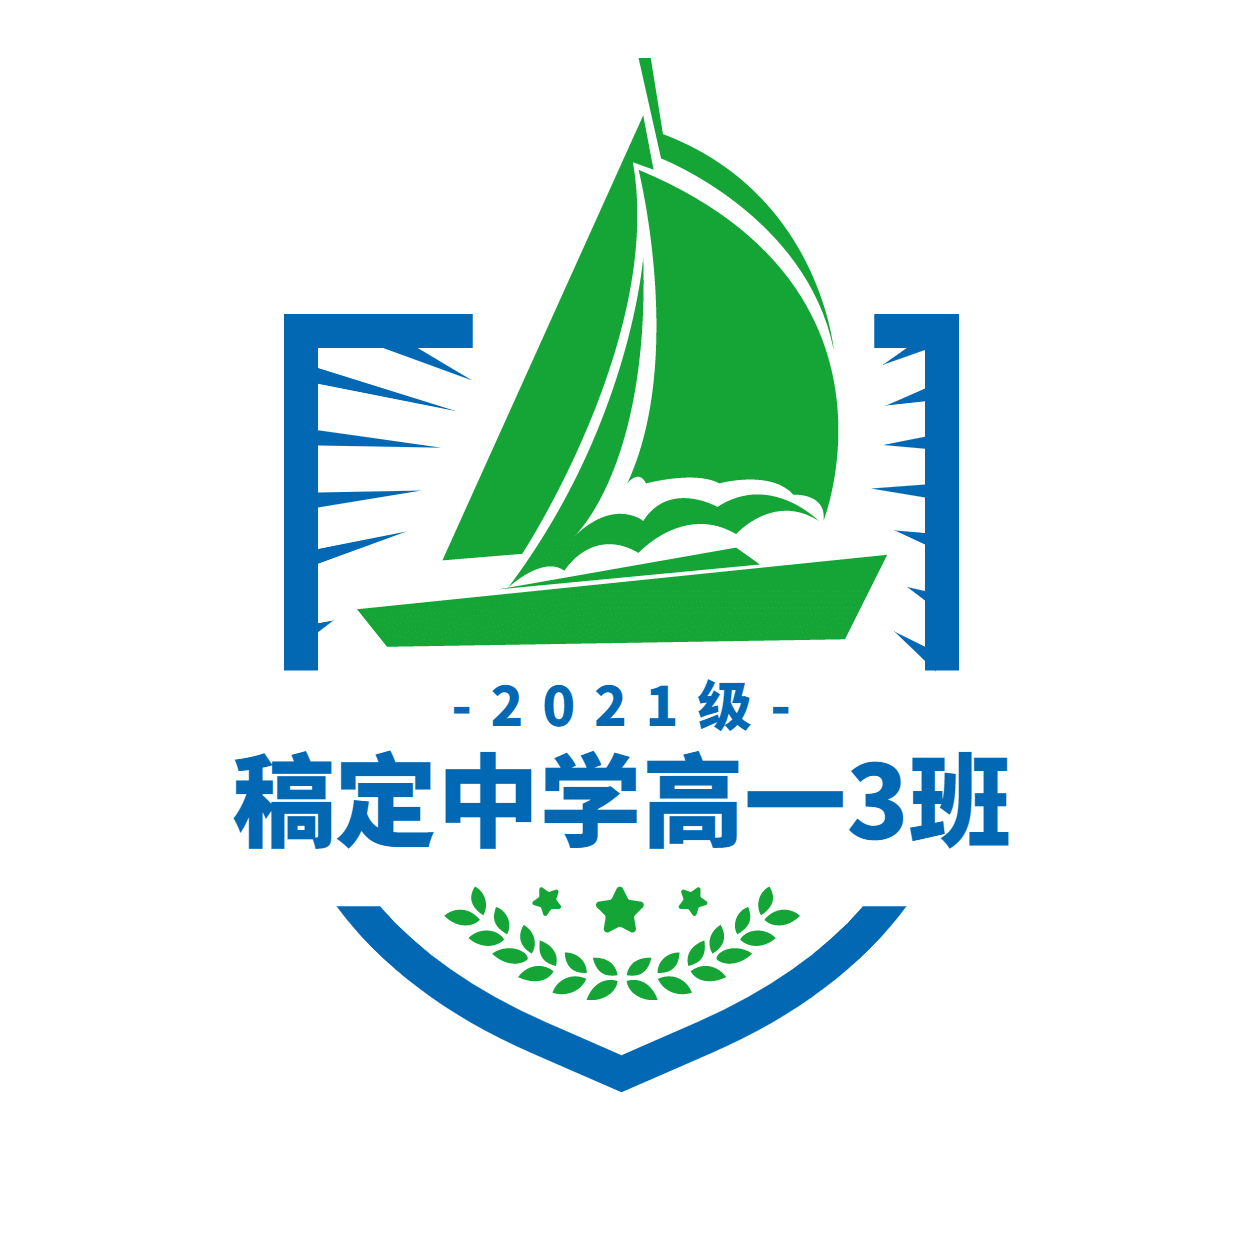 文本logo